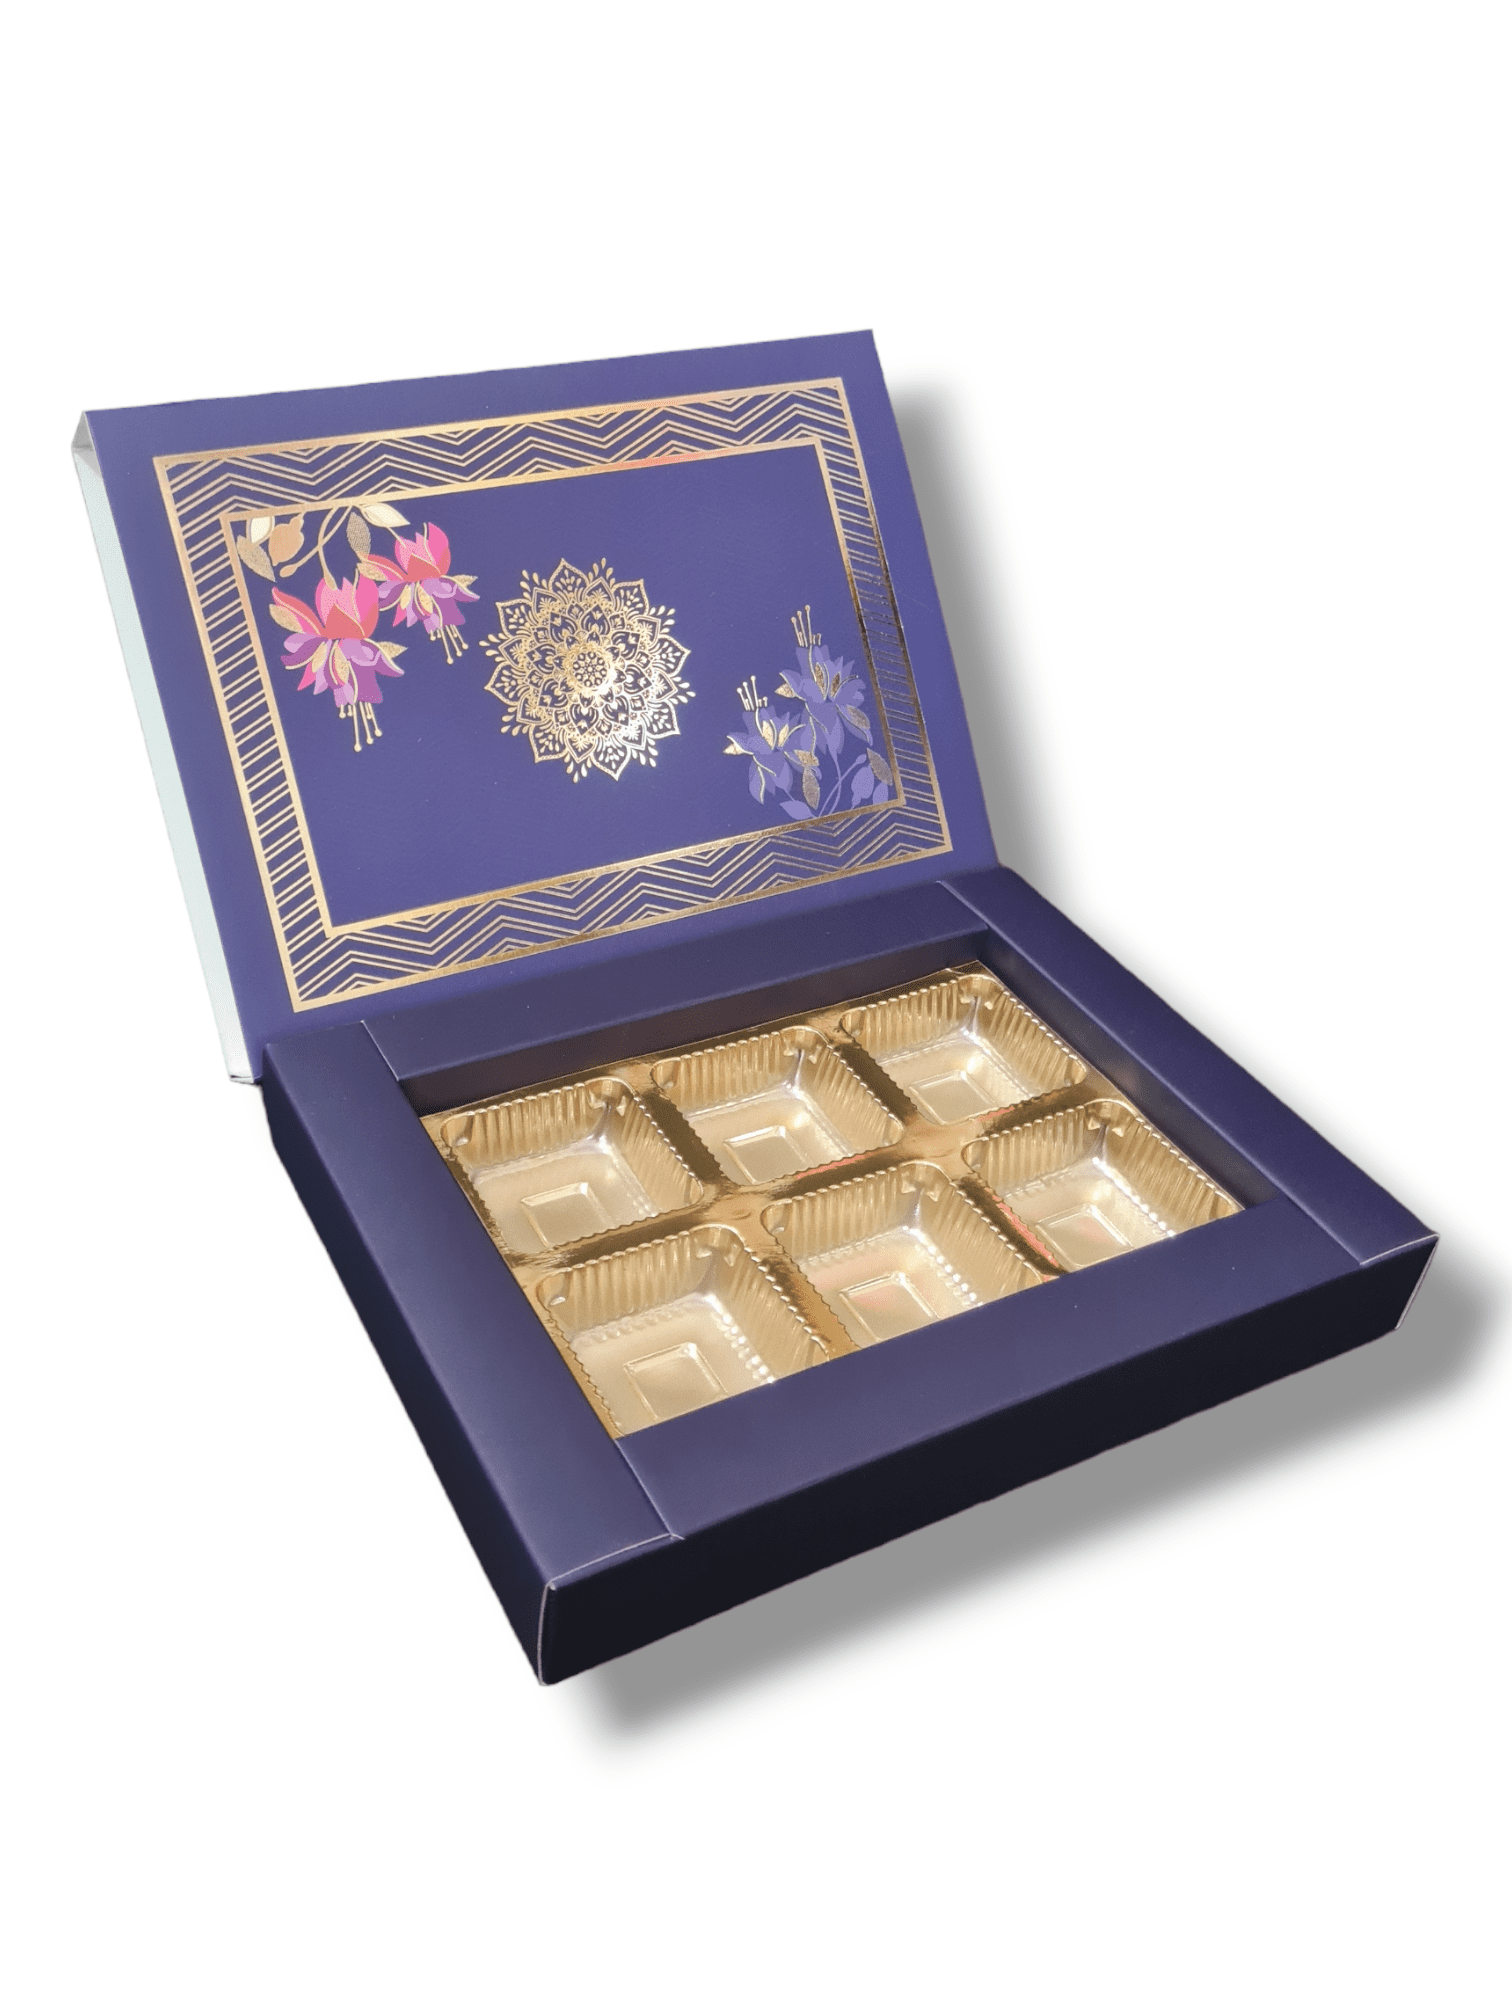 Birthday Gift Box – Vermont Nut Free Chocolates